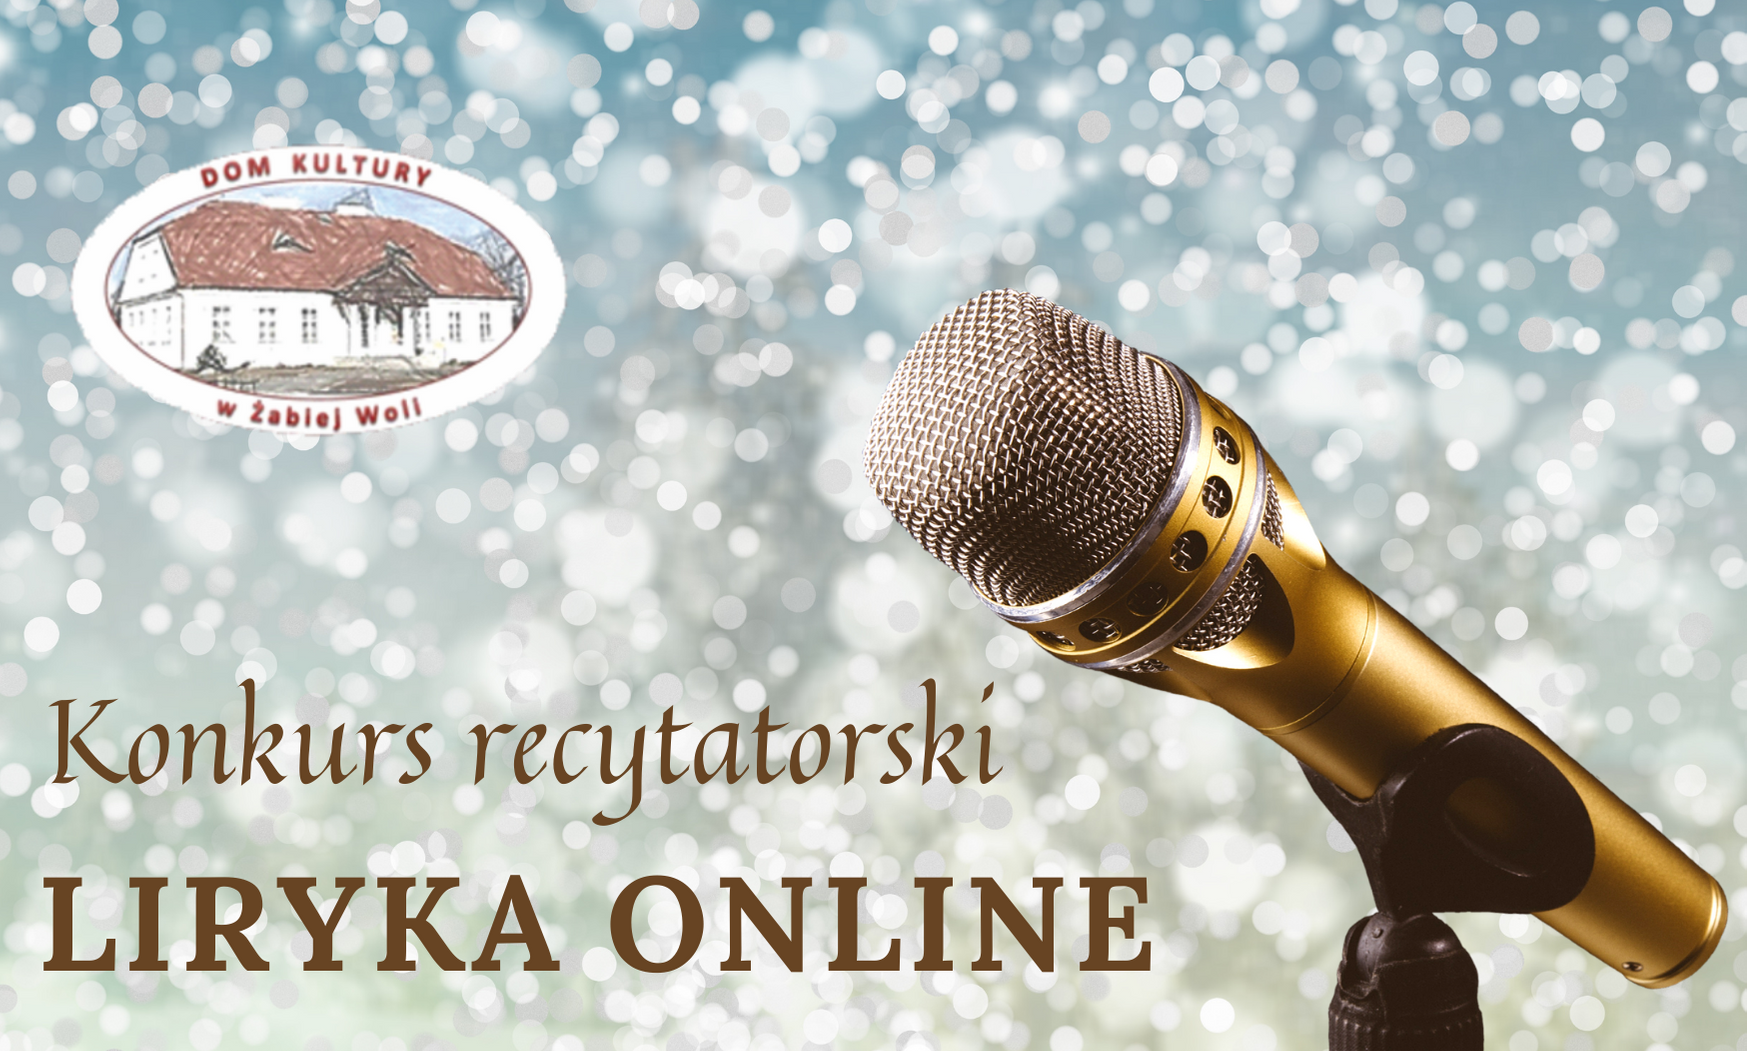 Liryka online - konkurs recytatorski